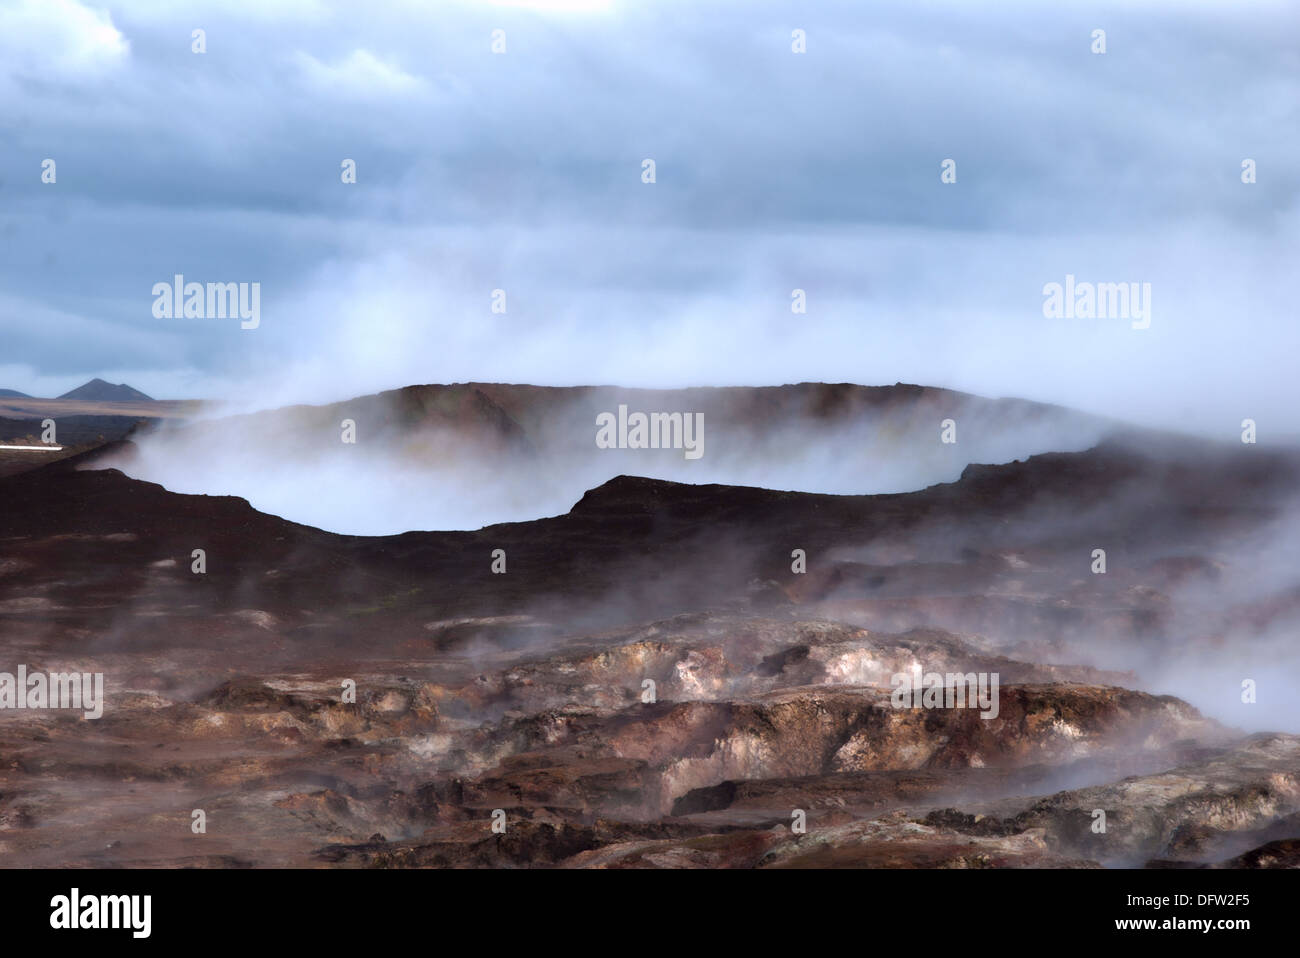 Hot springs of the Reykjanes peninsula where the Mid-Atlantic Ridge rises above sea level to form Iceland. Stock Photo